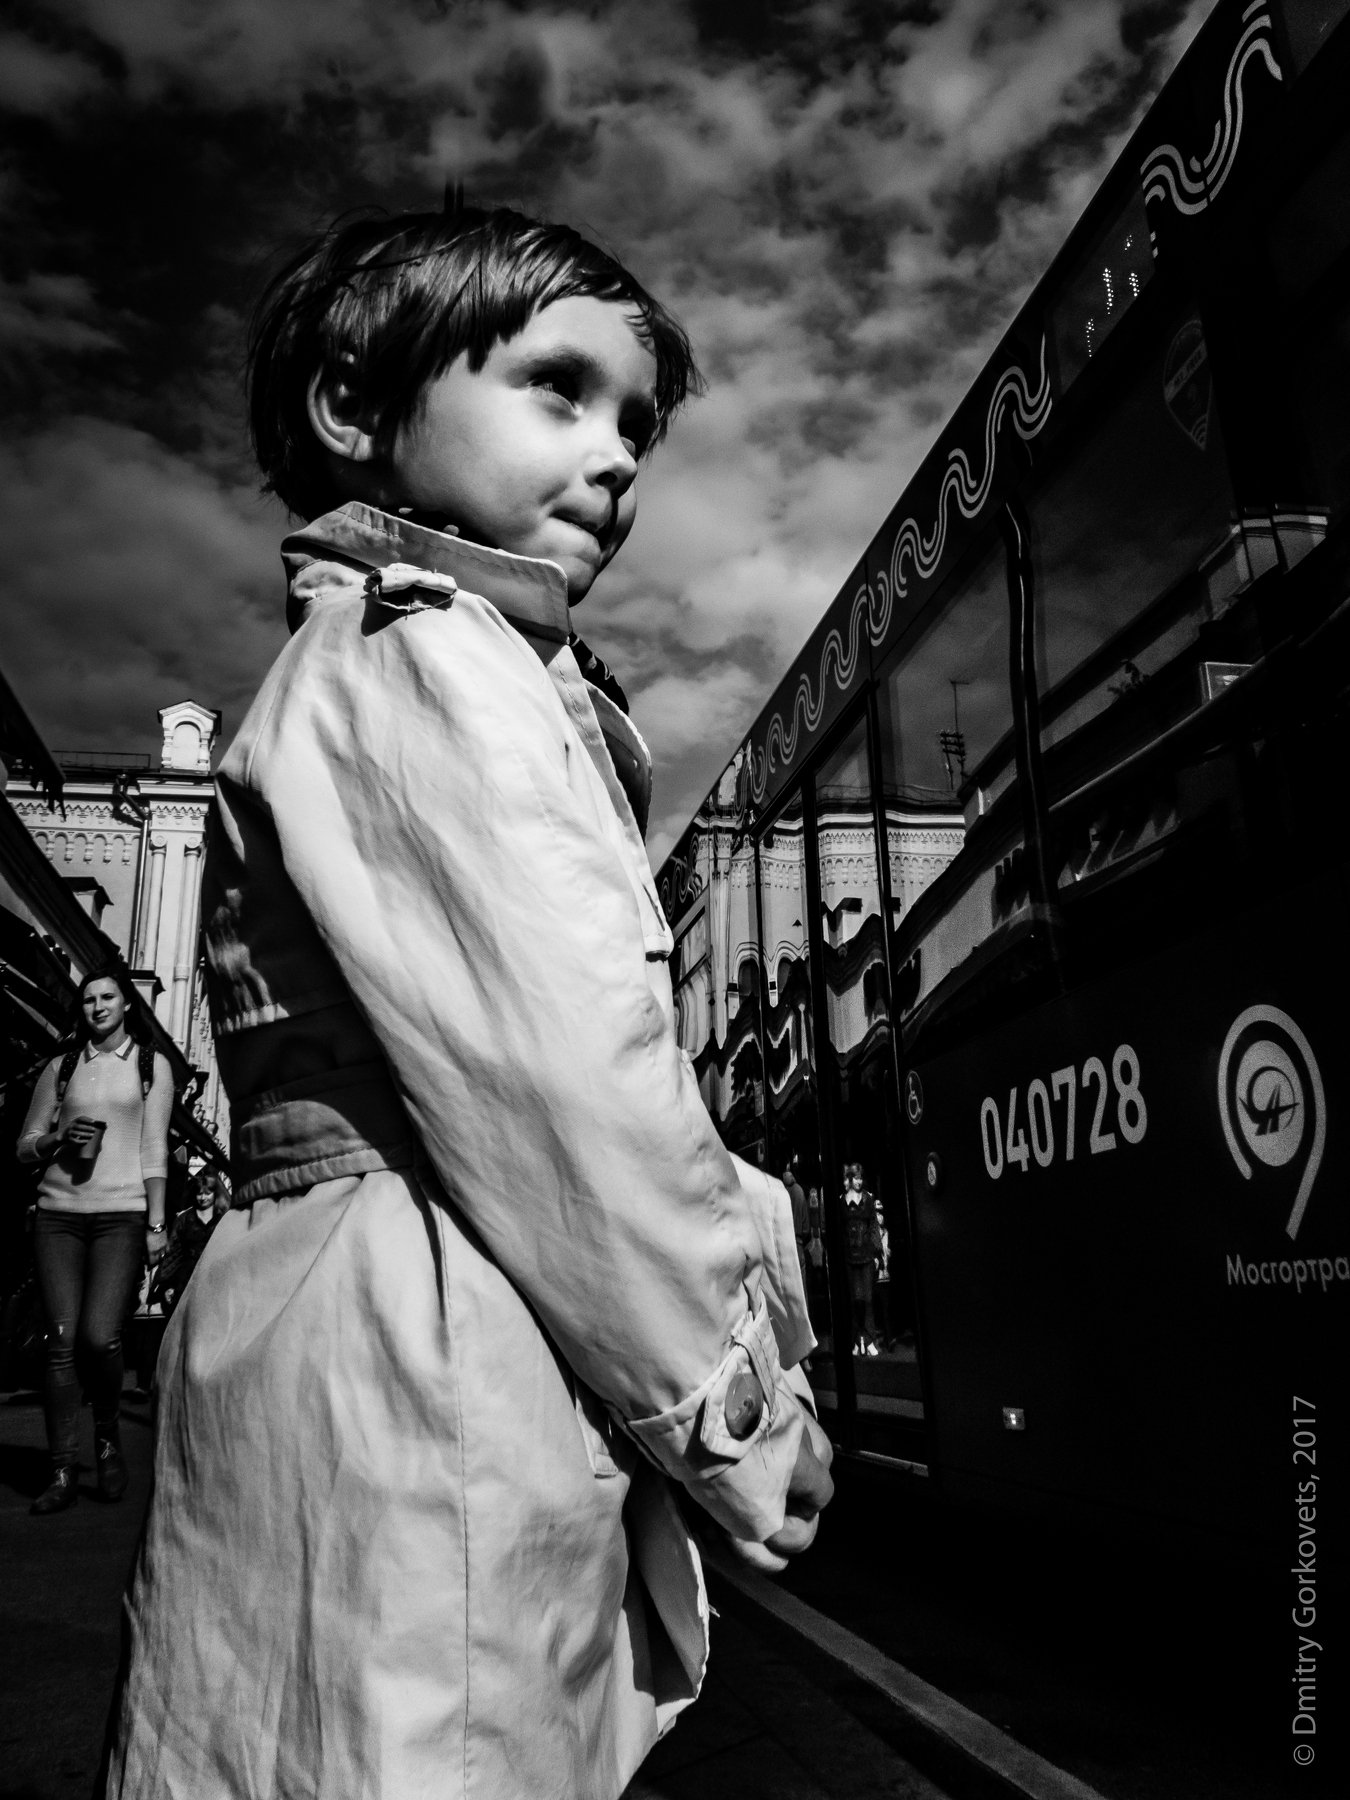 #streetphoto #bw #blackandwhite #portrait #bwportrait #cityscapes #PhotoByDmitryGorkovets, Горковец Дмитрий